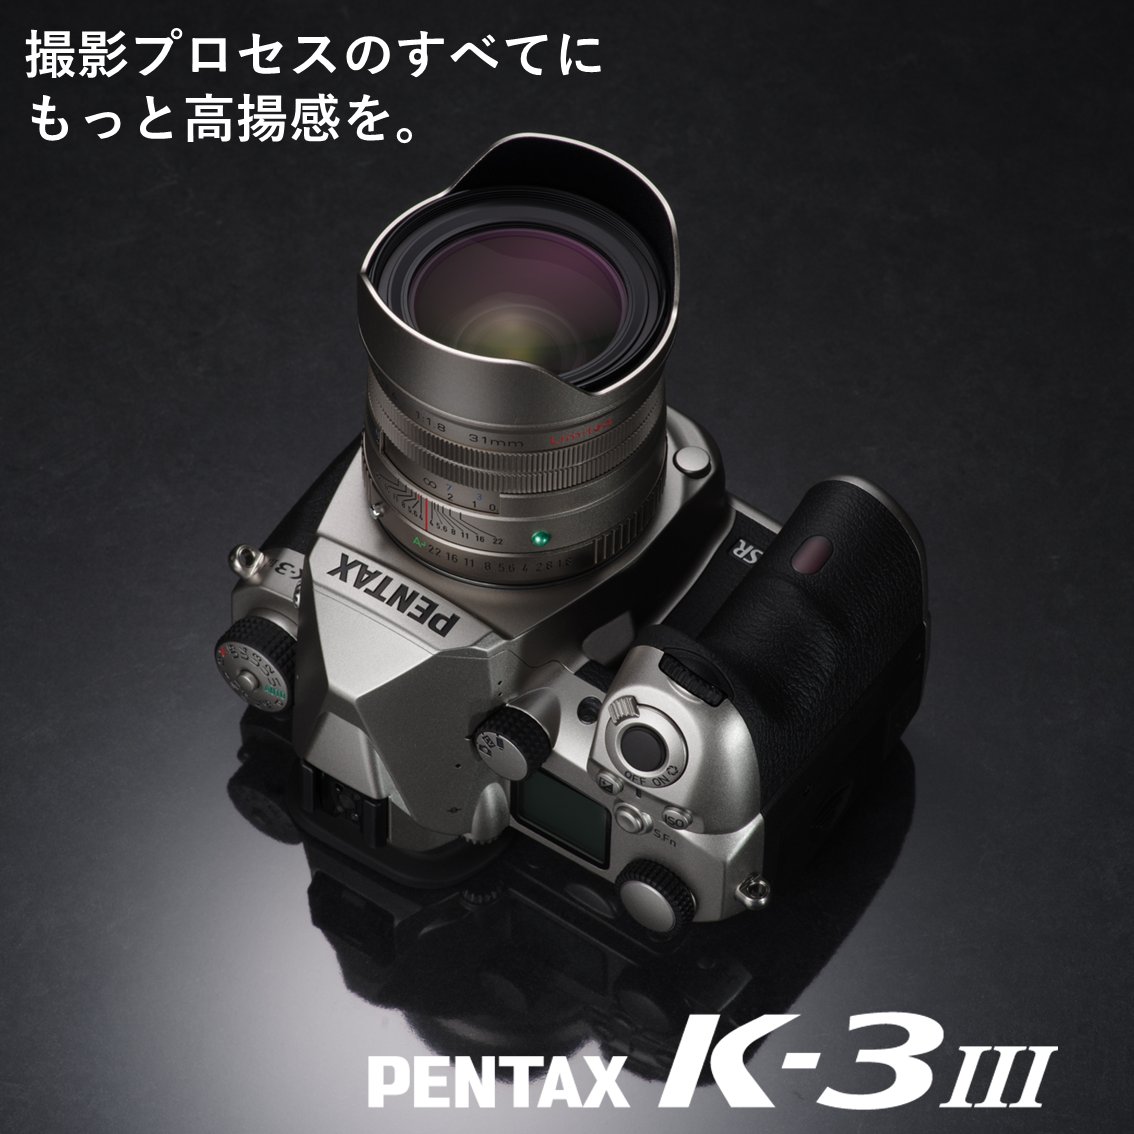 ［PENTAX K-3 Mark III］
カメラを構えて、光学ファインダーを覗き込む。
見えてくるのは、自然の光に照らされた世界のありのままの美しさ。
そこに何を見て、何を発見するか。
画質向上だけでなく、撮影体験にもこだわり抜いたPENTAX APS-Cフラッグシップモデル。
製品情報：ricoh-imaging.co.jp/japan/products…